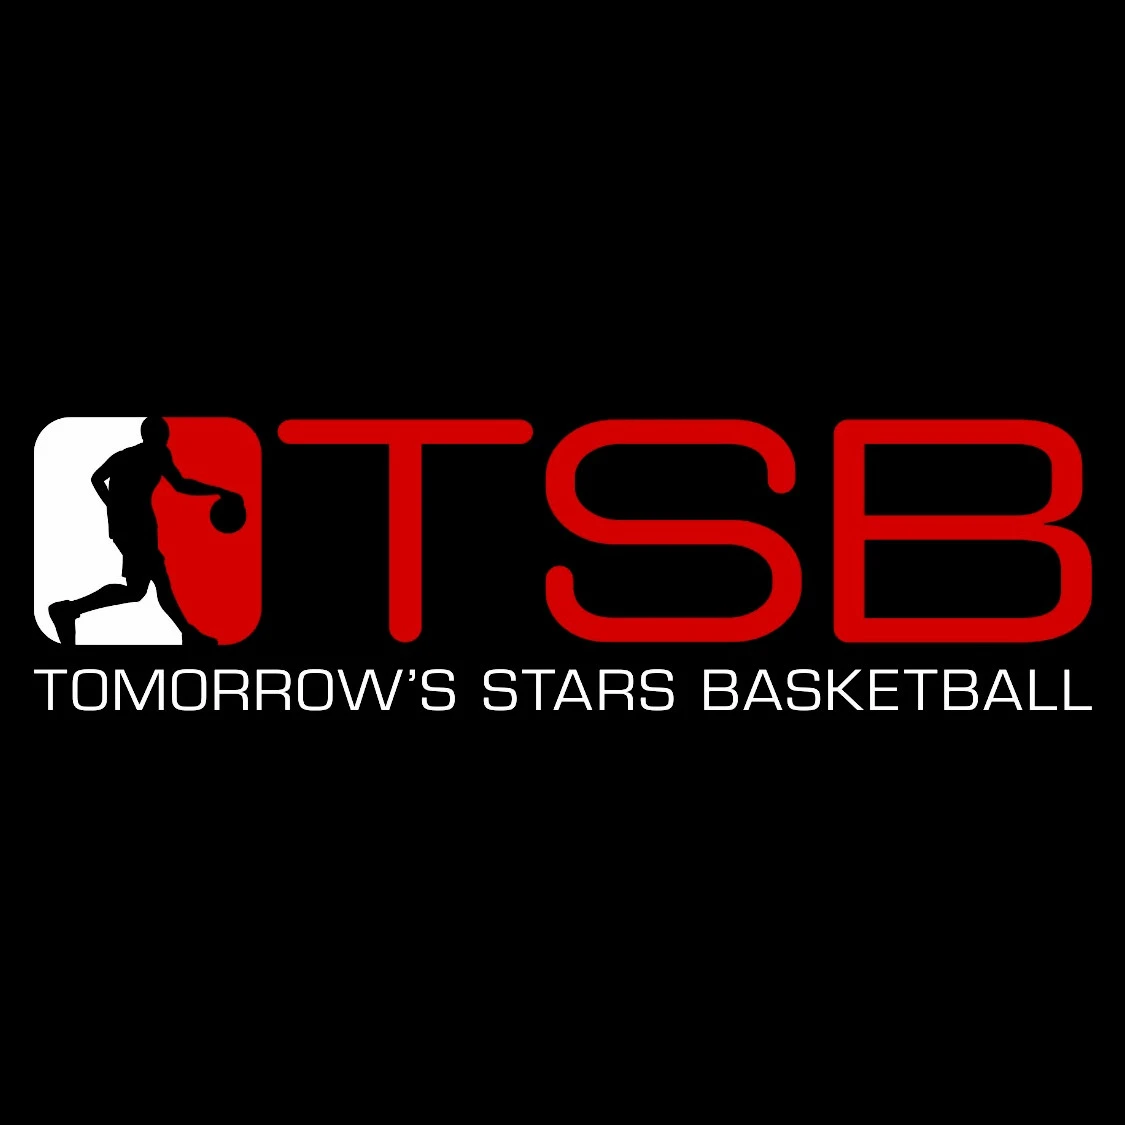 Tomorrow's Stars Basketball